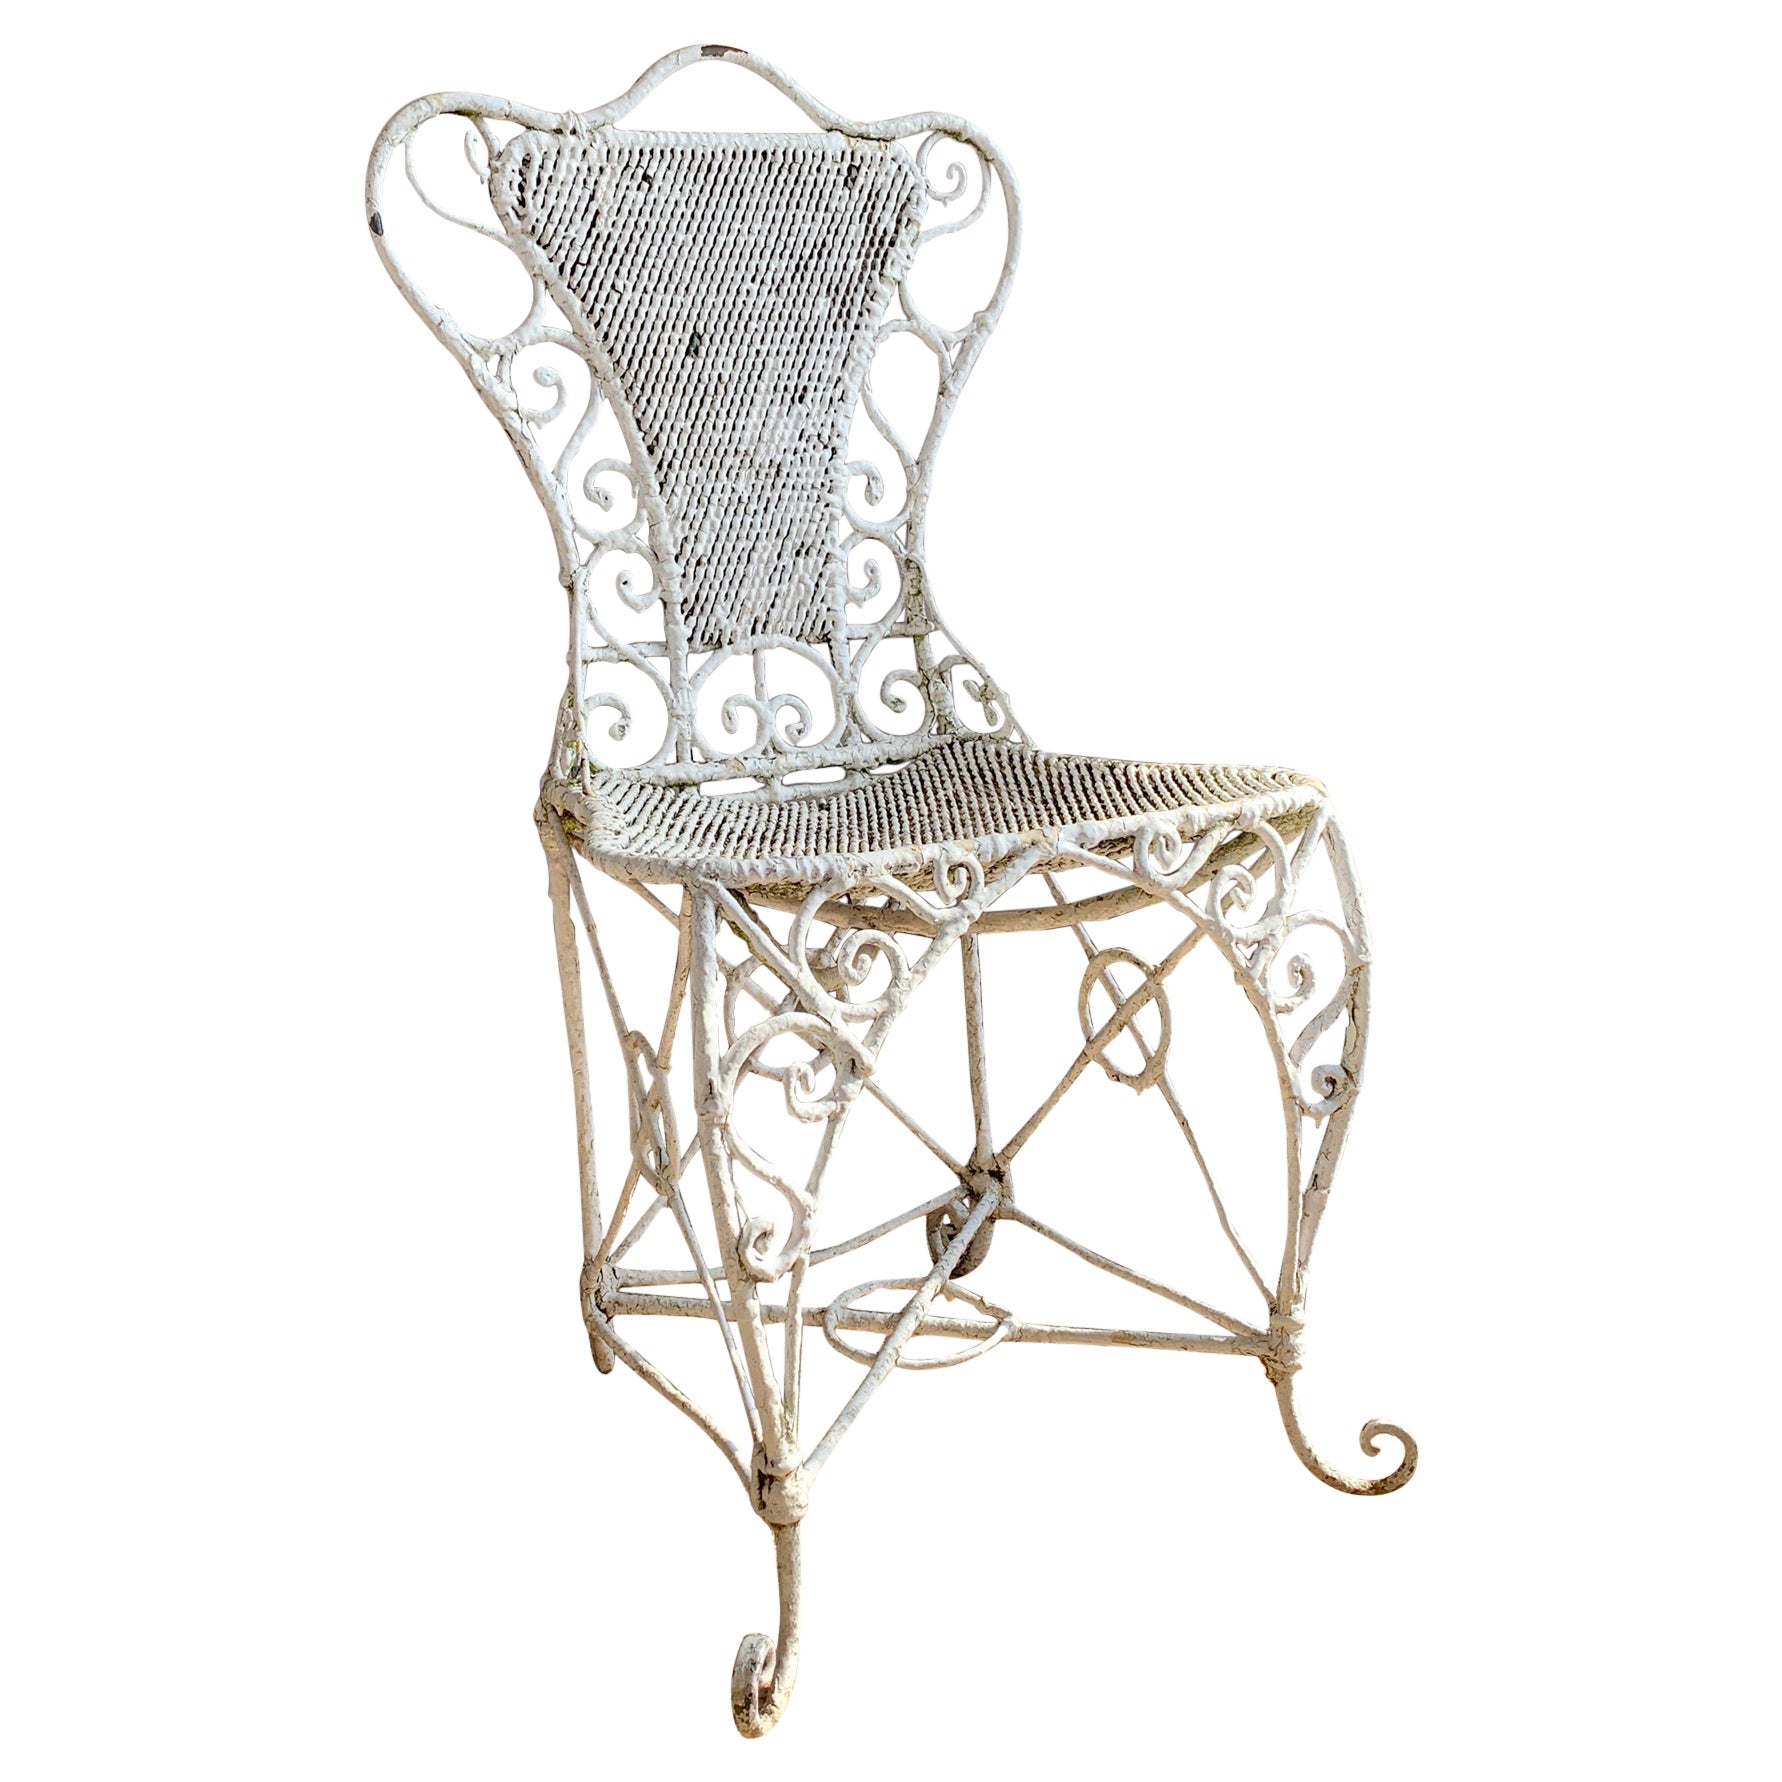 Ornate Regency White Wirework Iron Chair